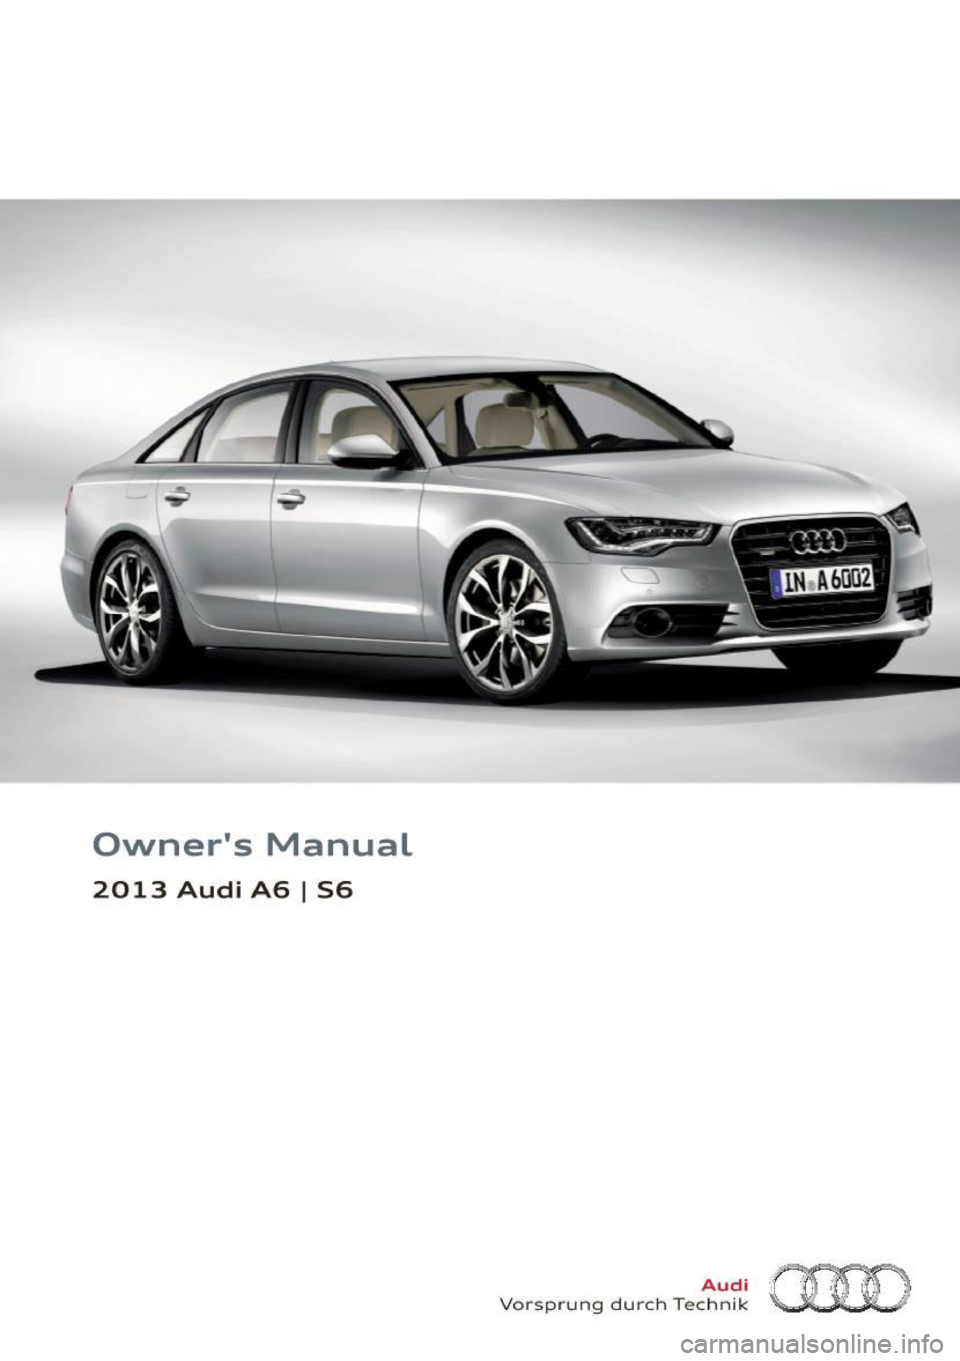 AUDI S6 2013  Owners Manual Owners  Manual 
2013  Audi  A6 I S6 
Vorsp rung  du rch  Tec~~f~ (HO  